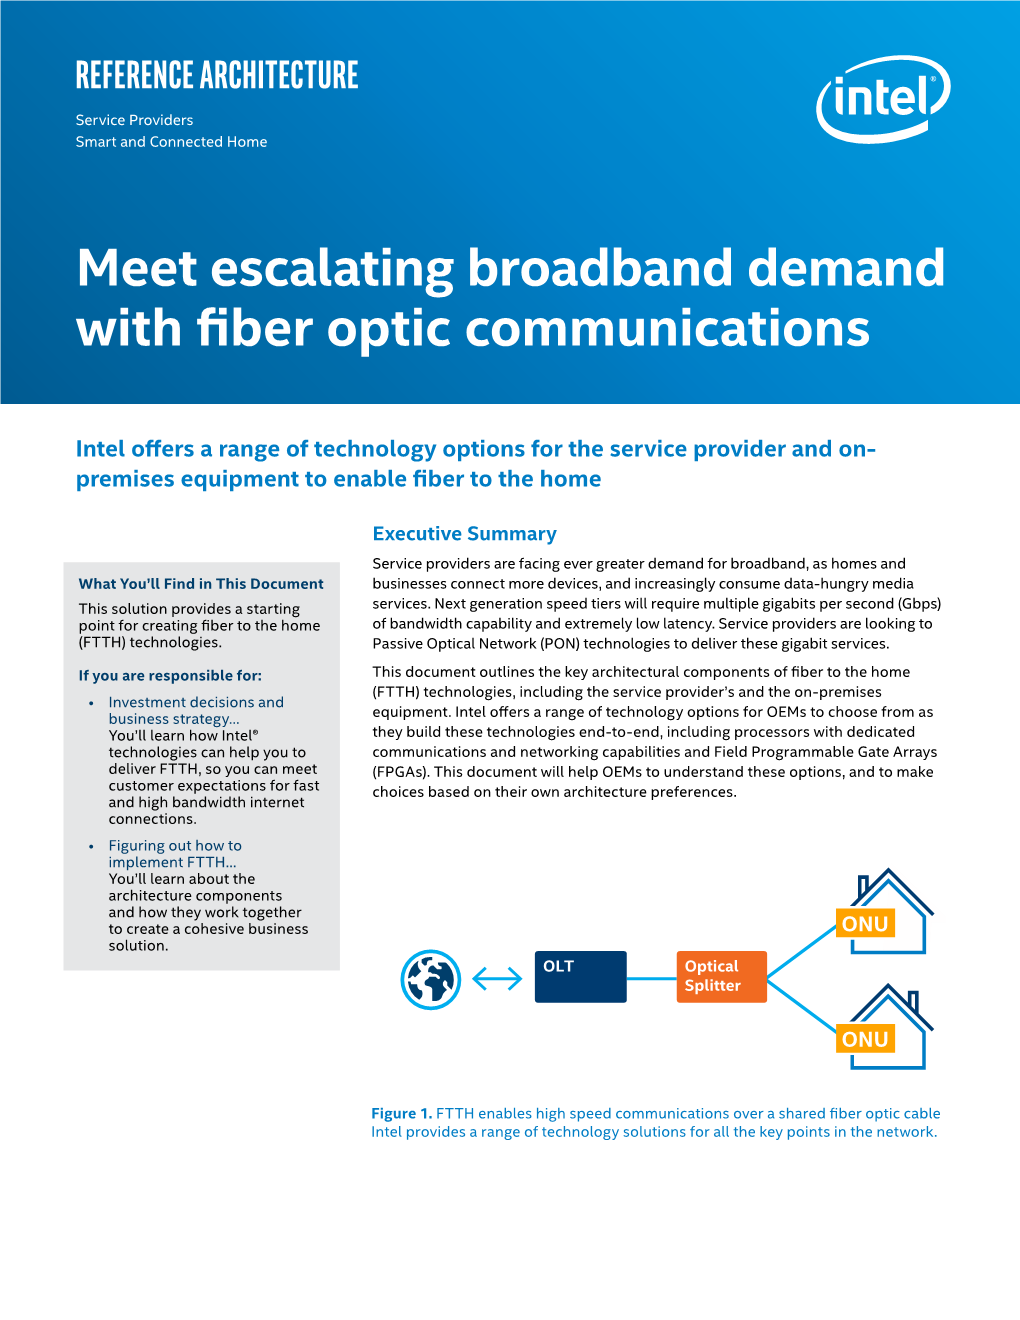 Meet Escalating Broadband Demand with Fiber to the Home